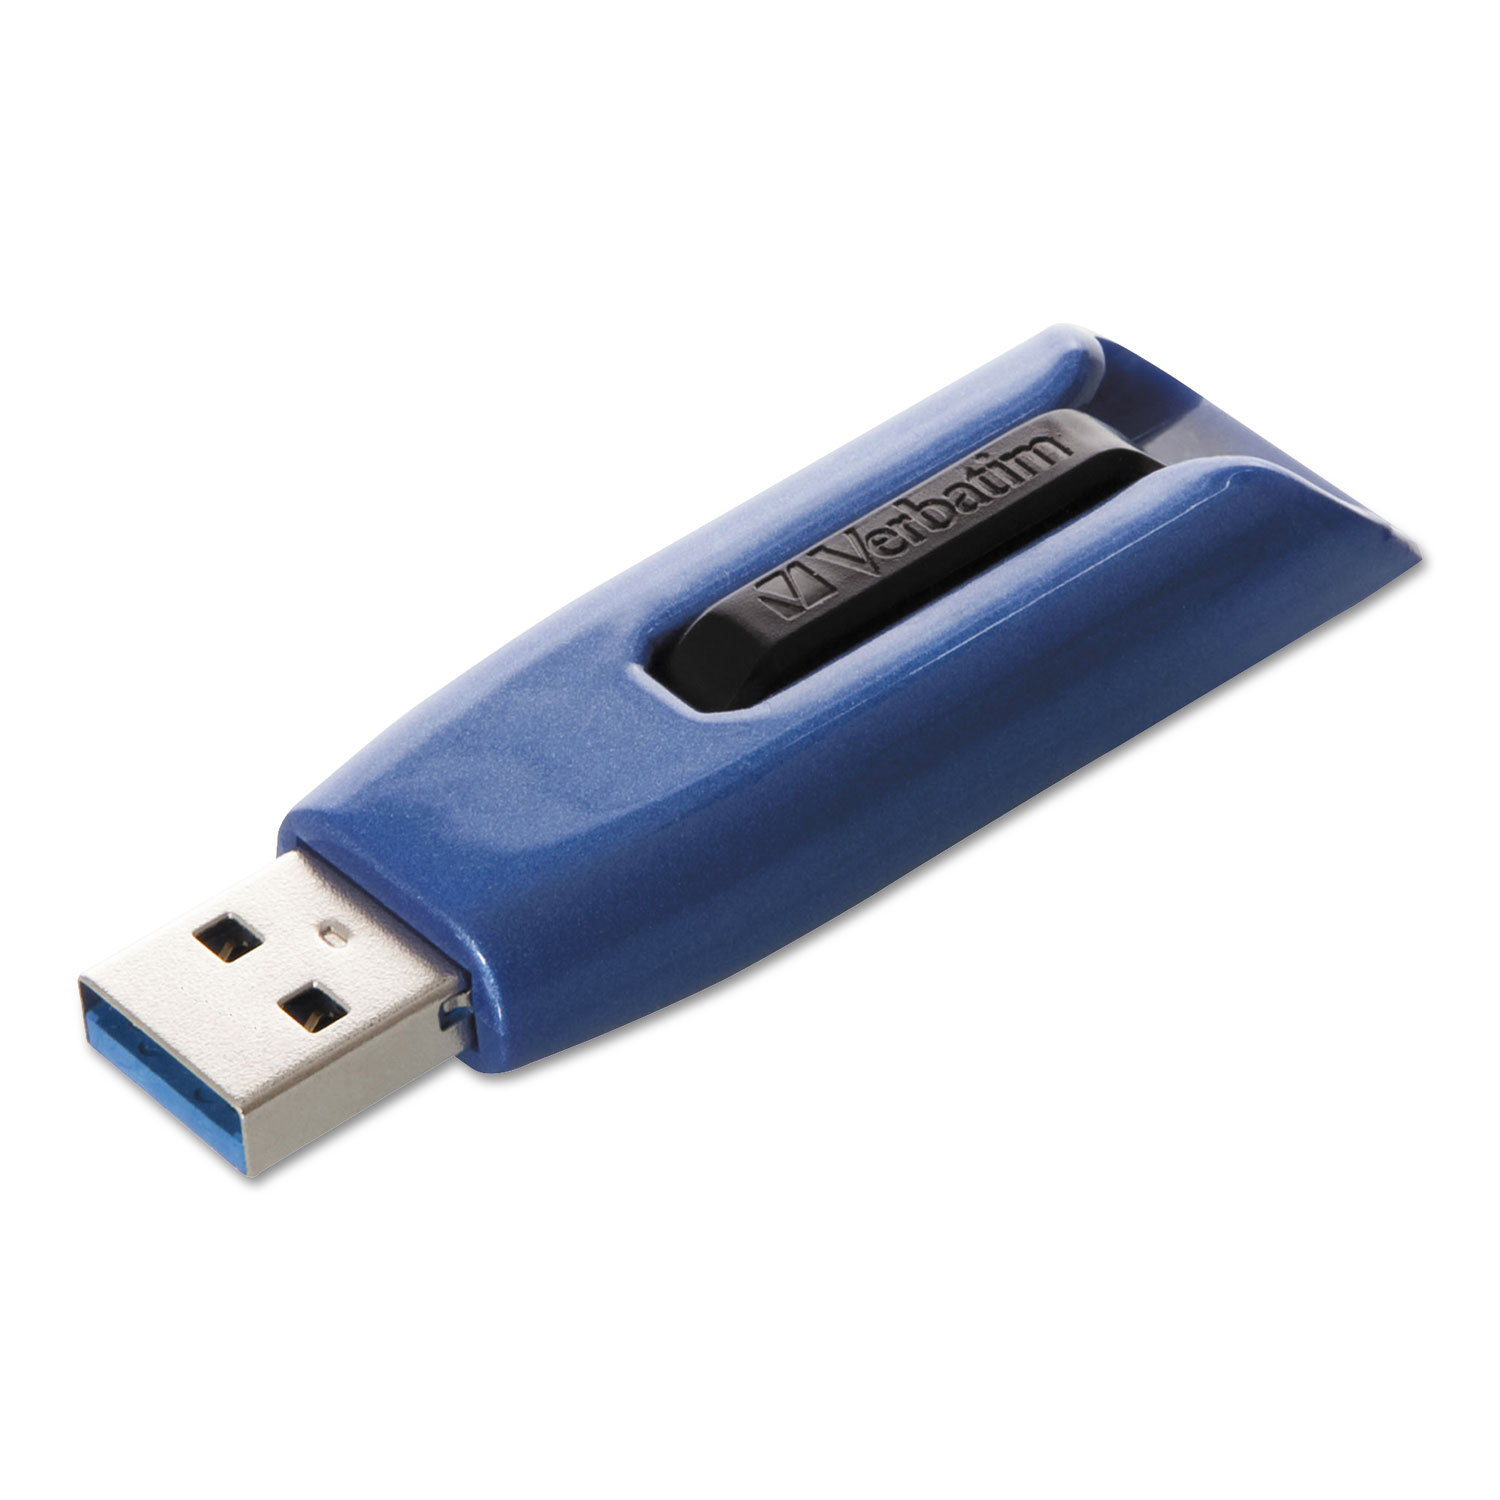 V3 Max Flash Drive, GB, Blue - Supply Solutions